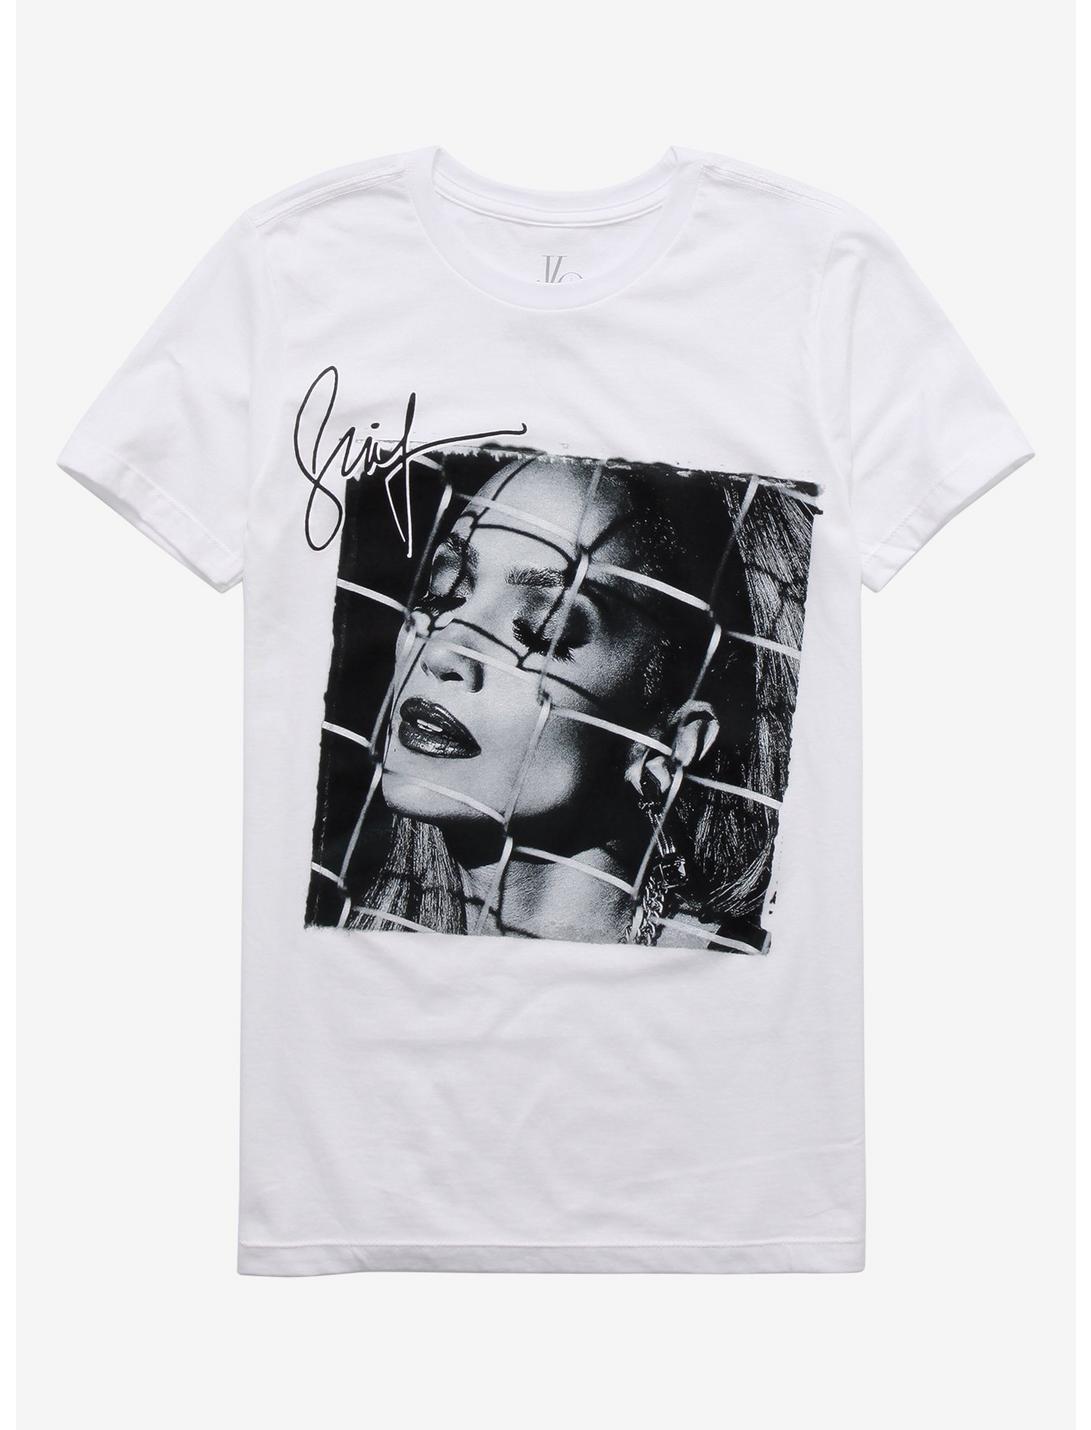 J.Lo Black & White Photo Girls T-Shirt | Hot Topic